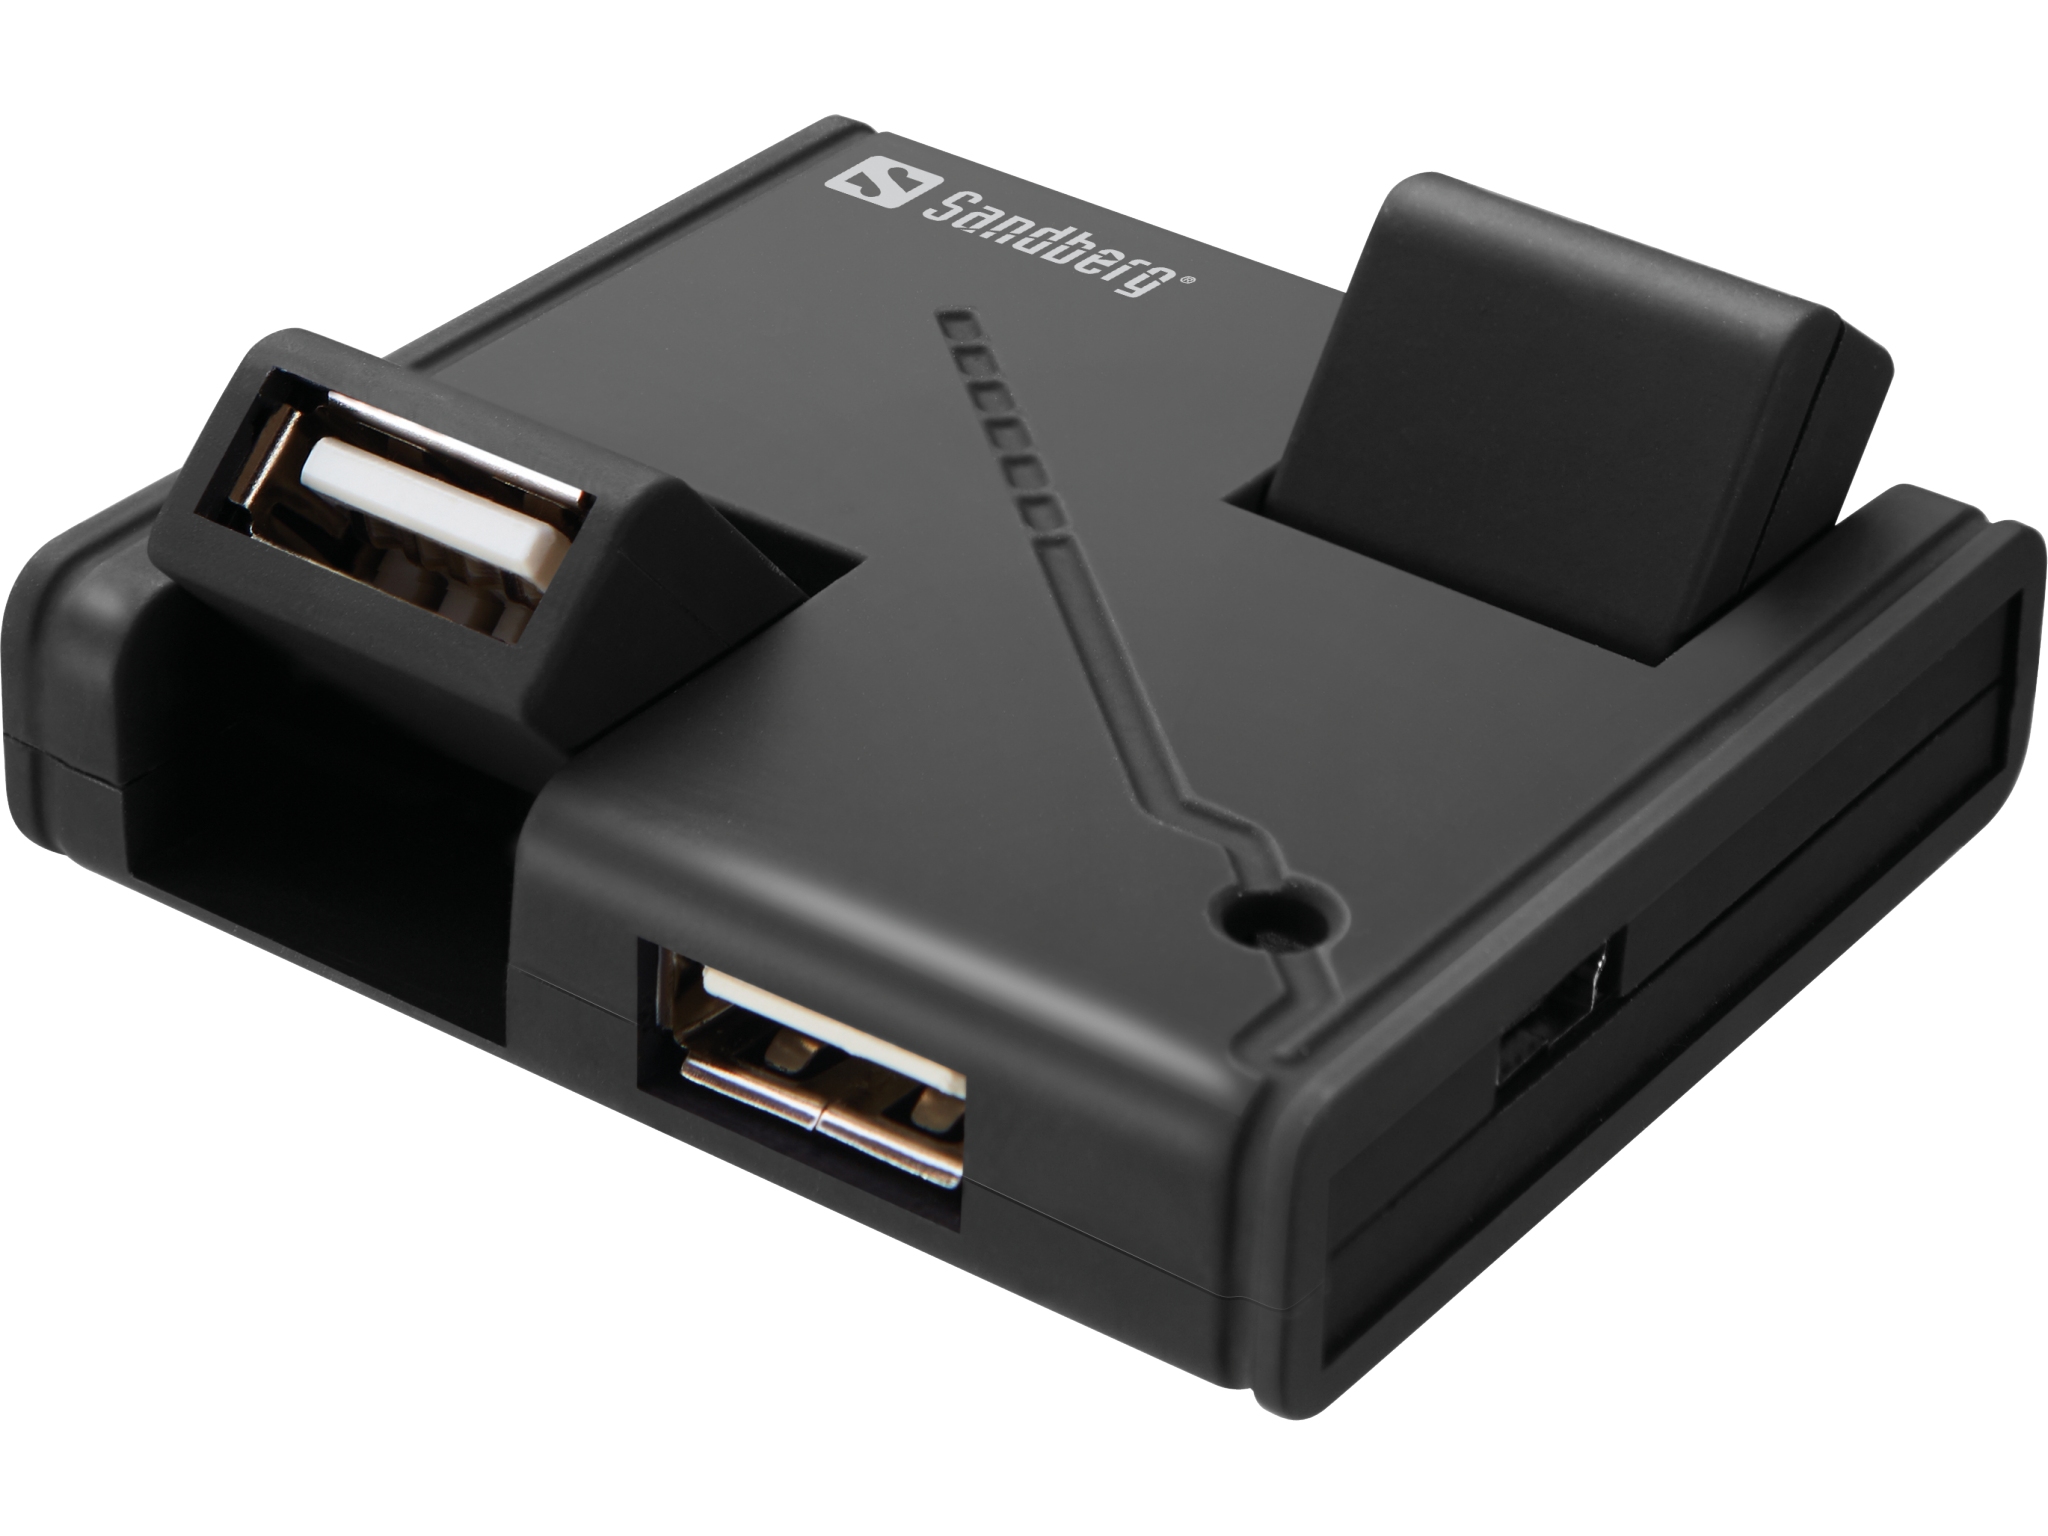 Sandberg 133-67 USB Hub 4 Ports